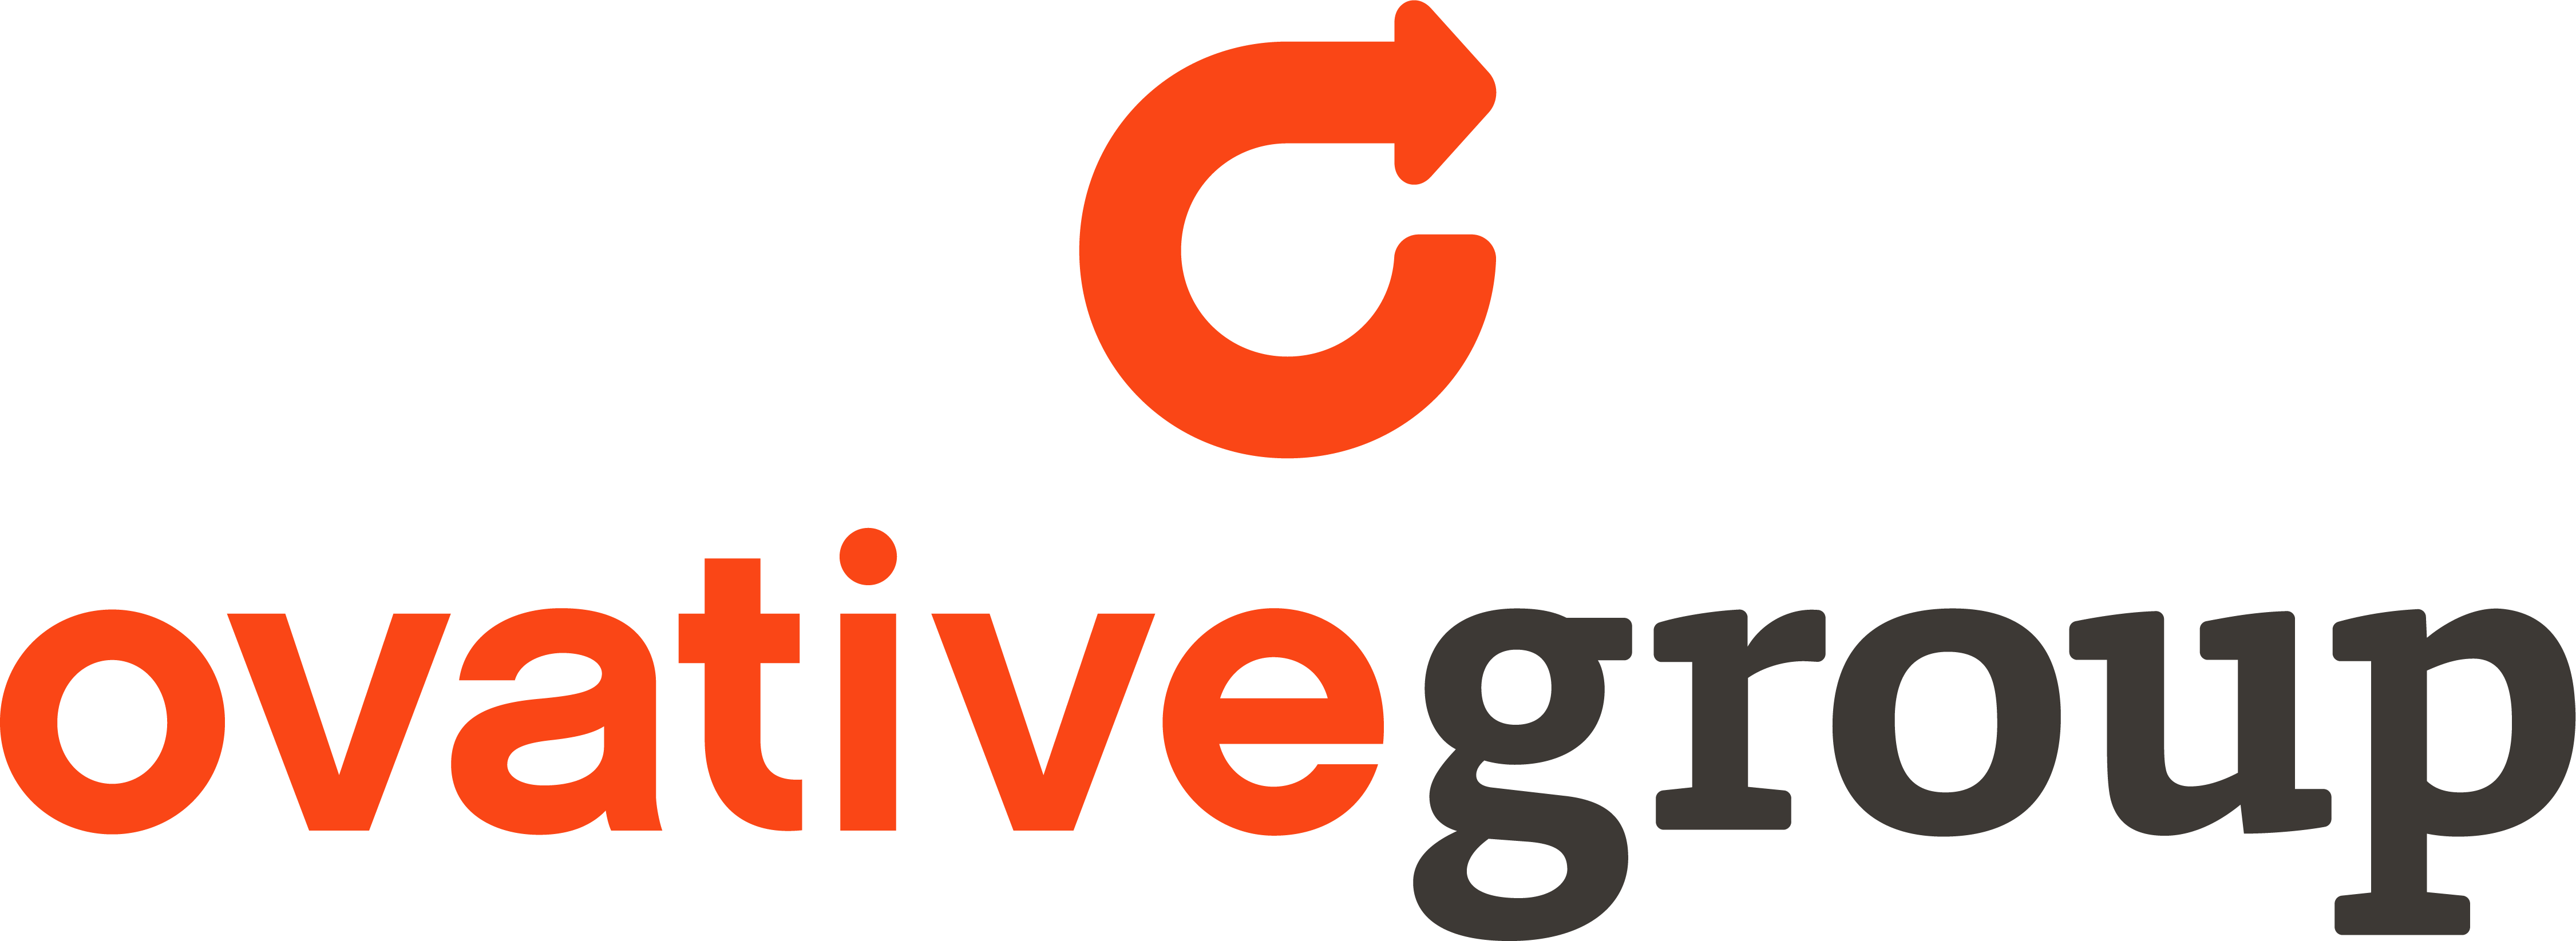 Ovative Group logo